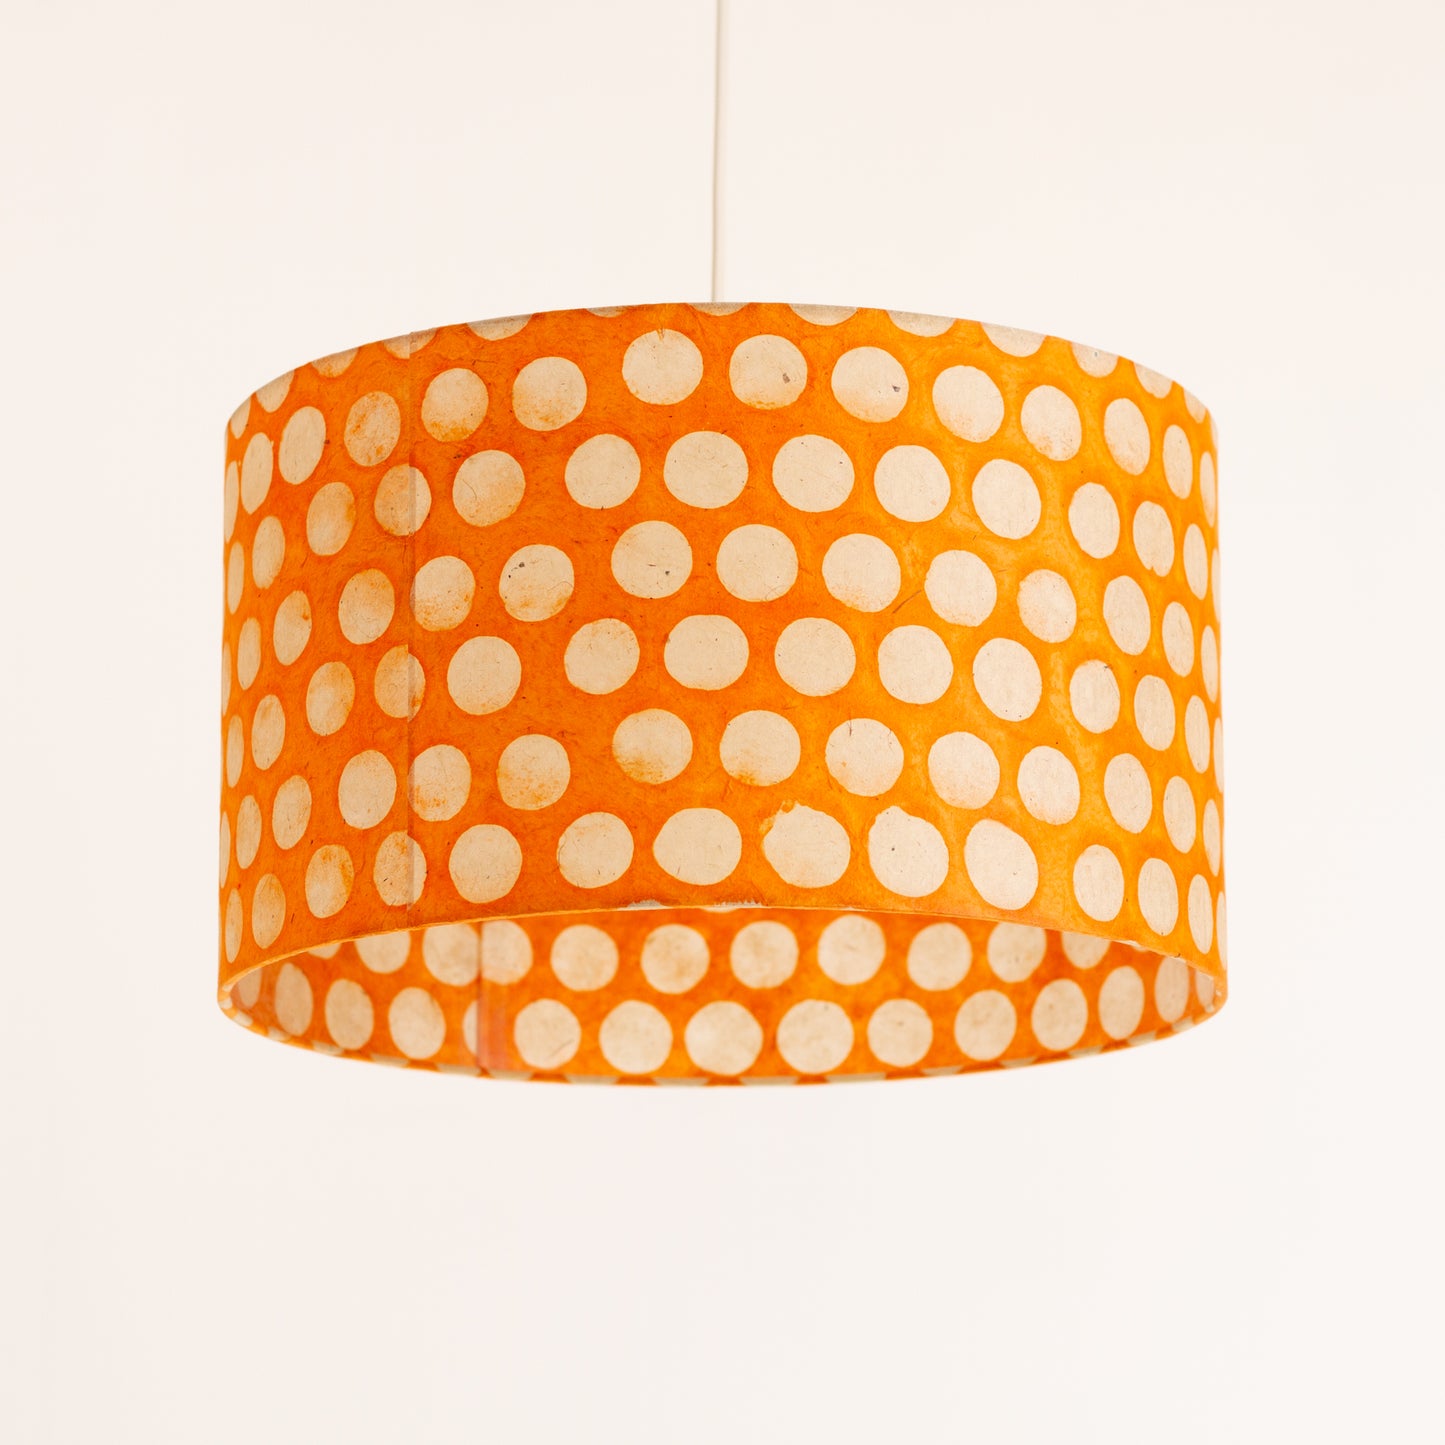 Drum Lamp Shade - B110 ~ Batik Dots on Orange, 35cm(d) x 20cm(h)